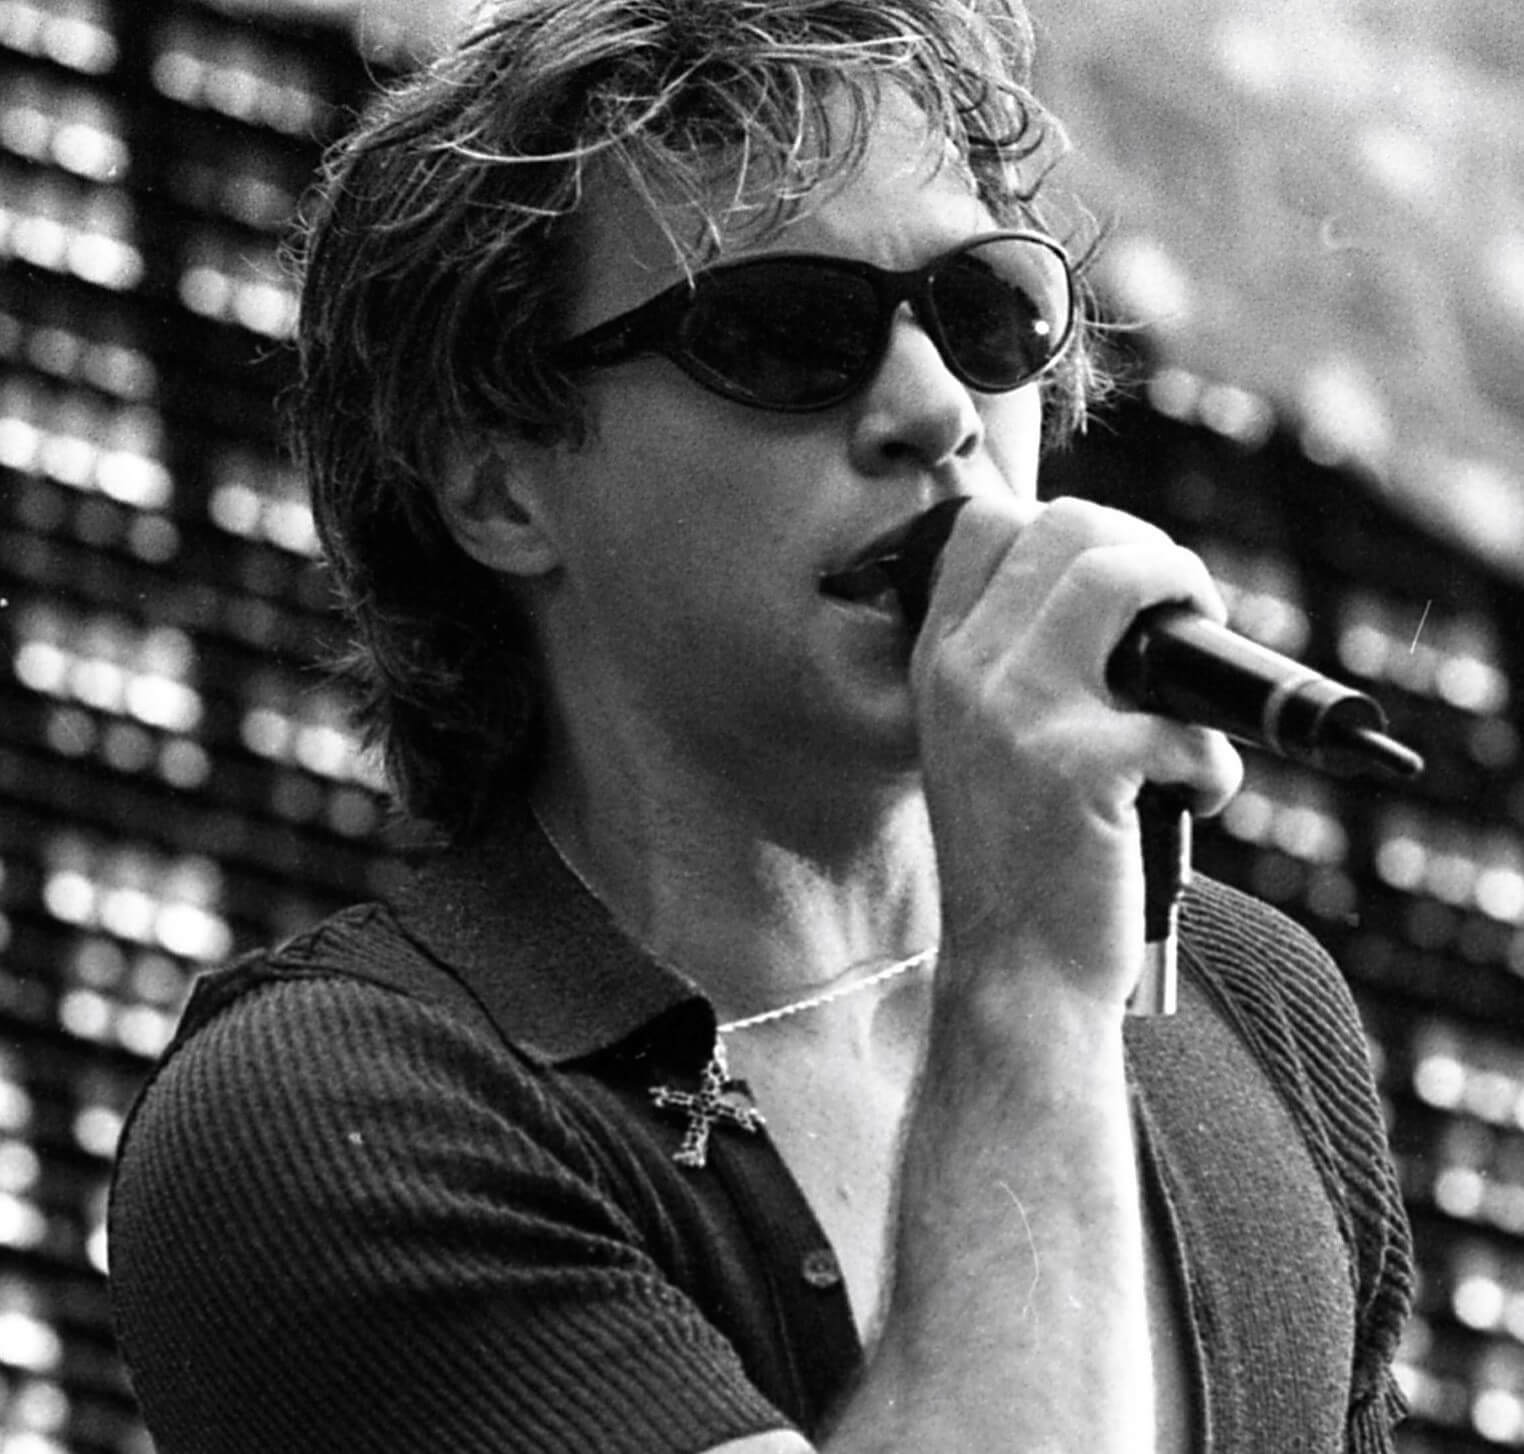 "Livin' on a Prayer' singer Jon Bon Jovi wearing sunglasses